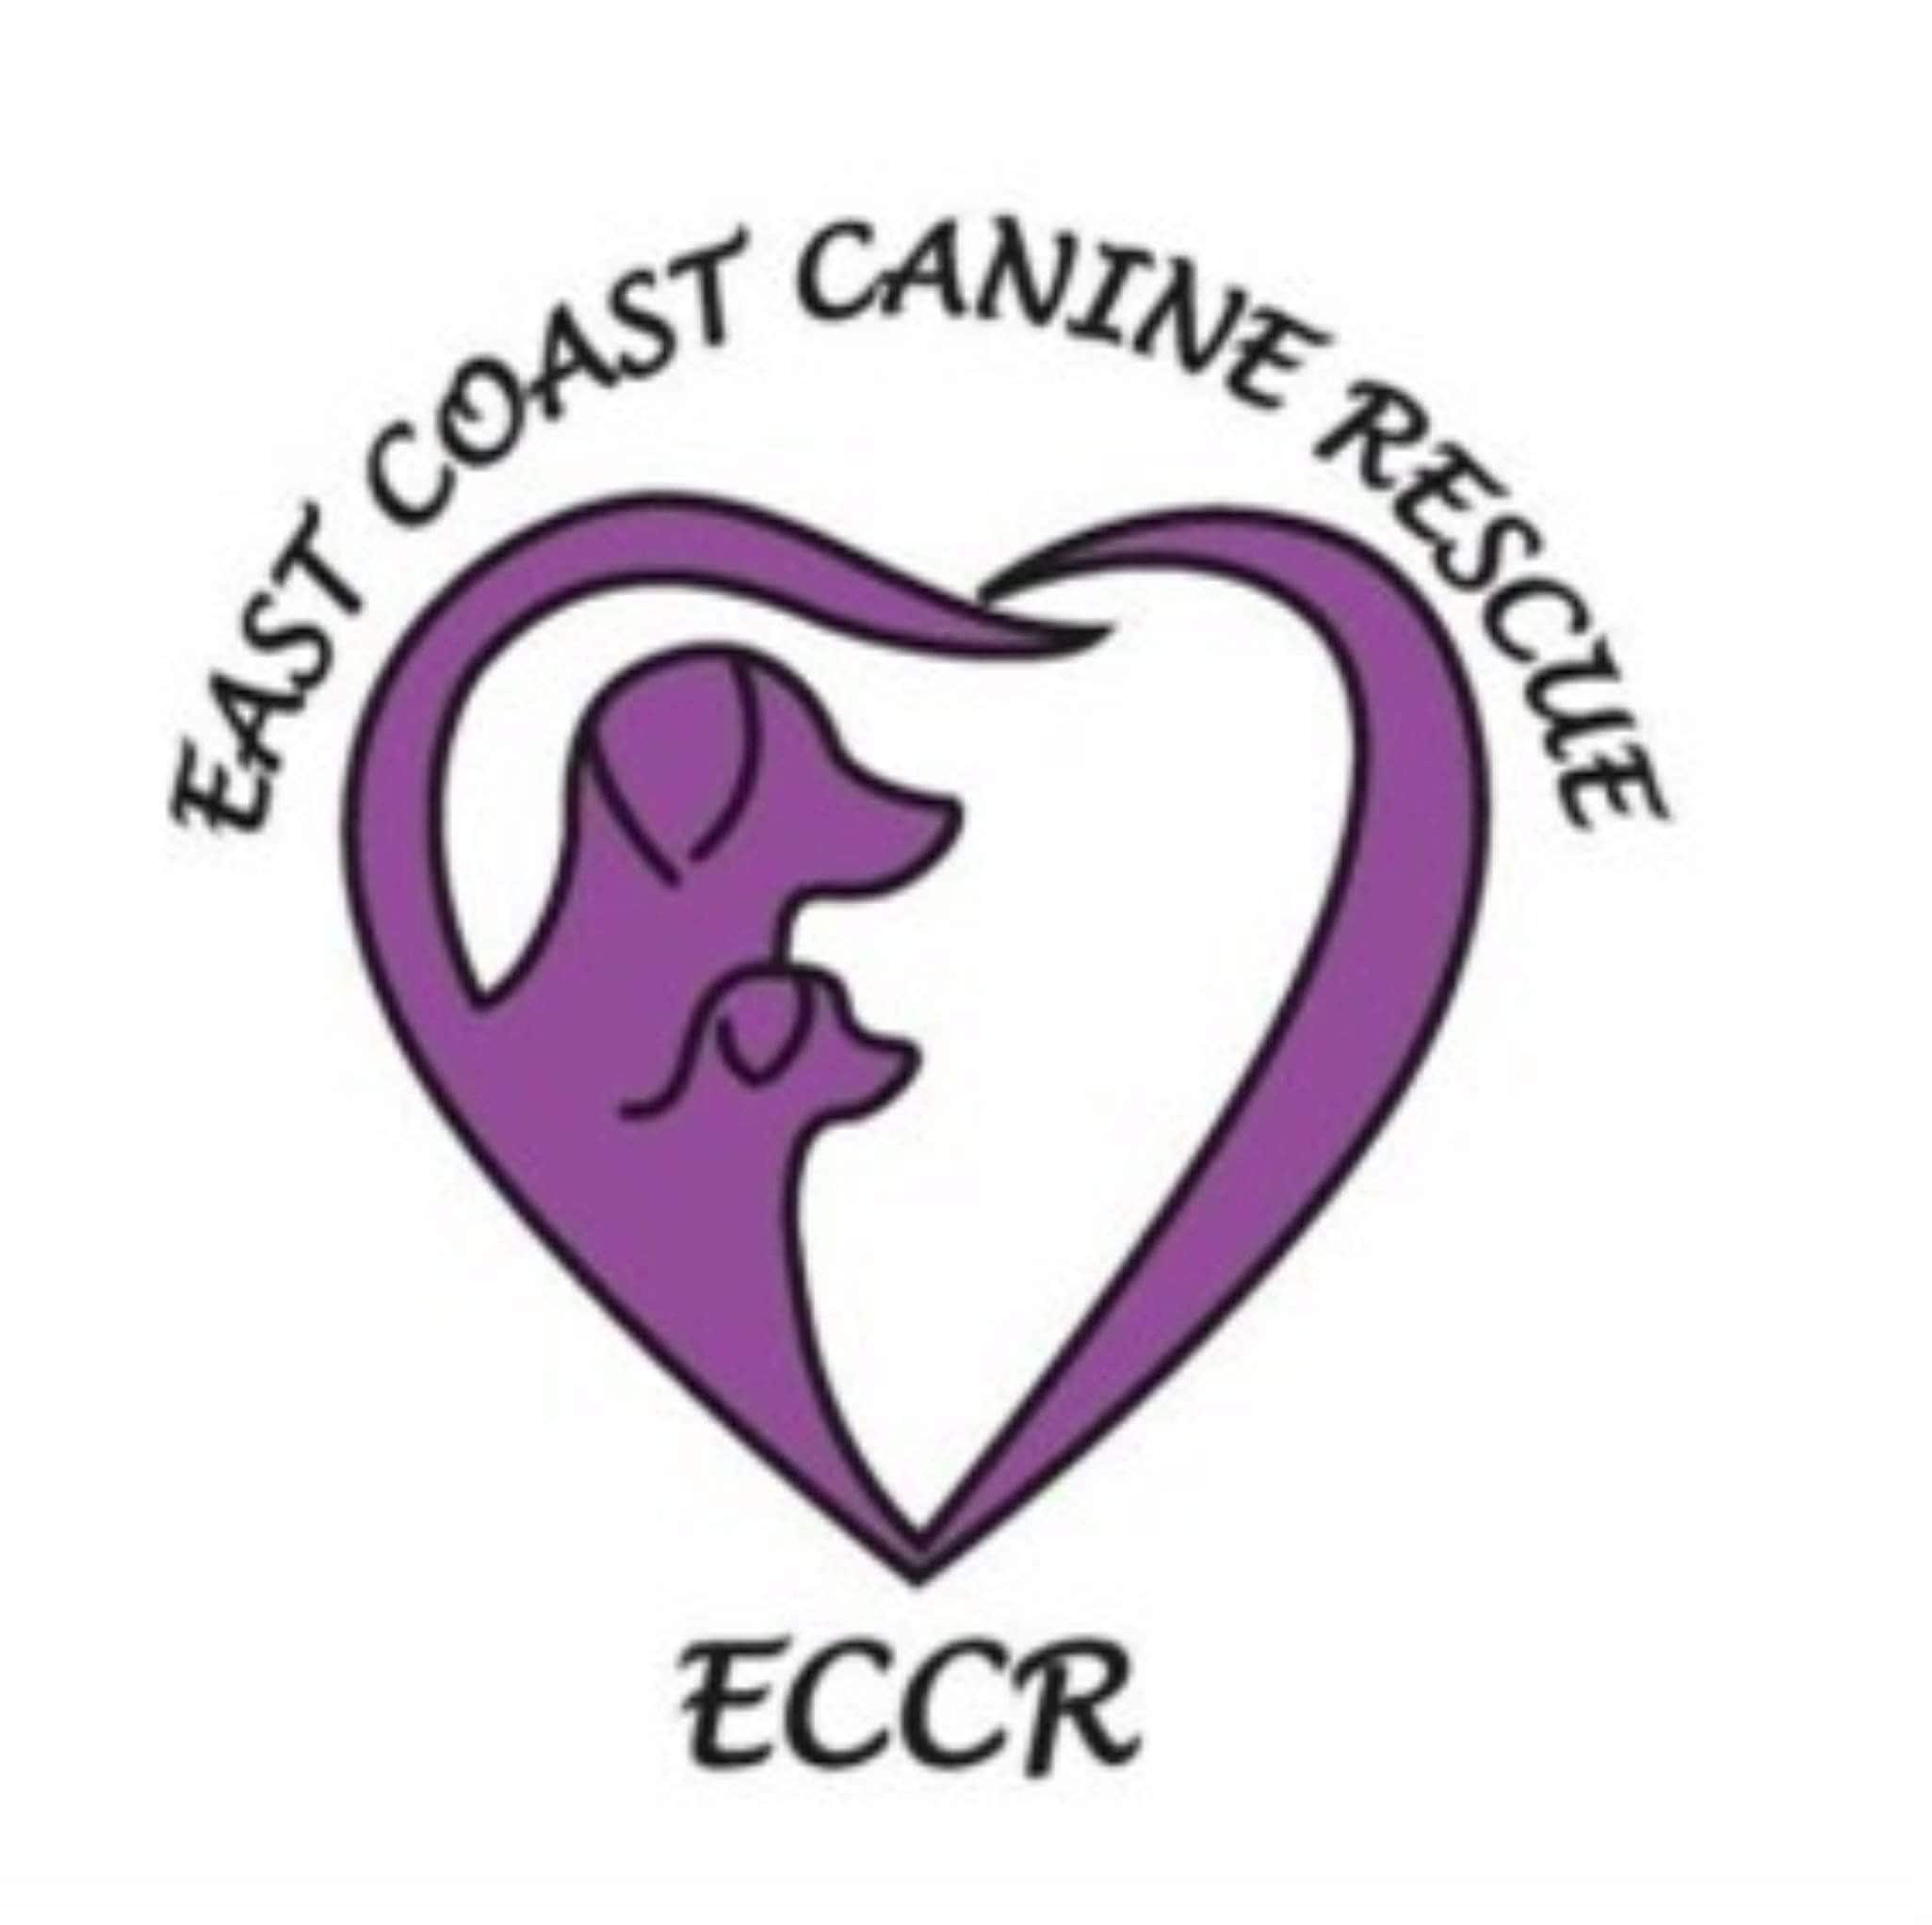 East Coast Canine Rescue